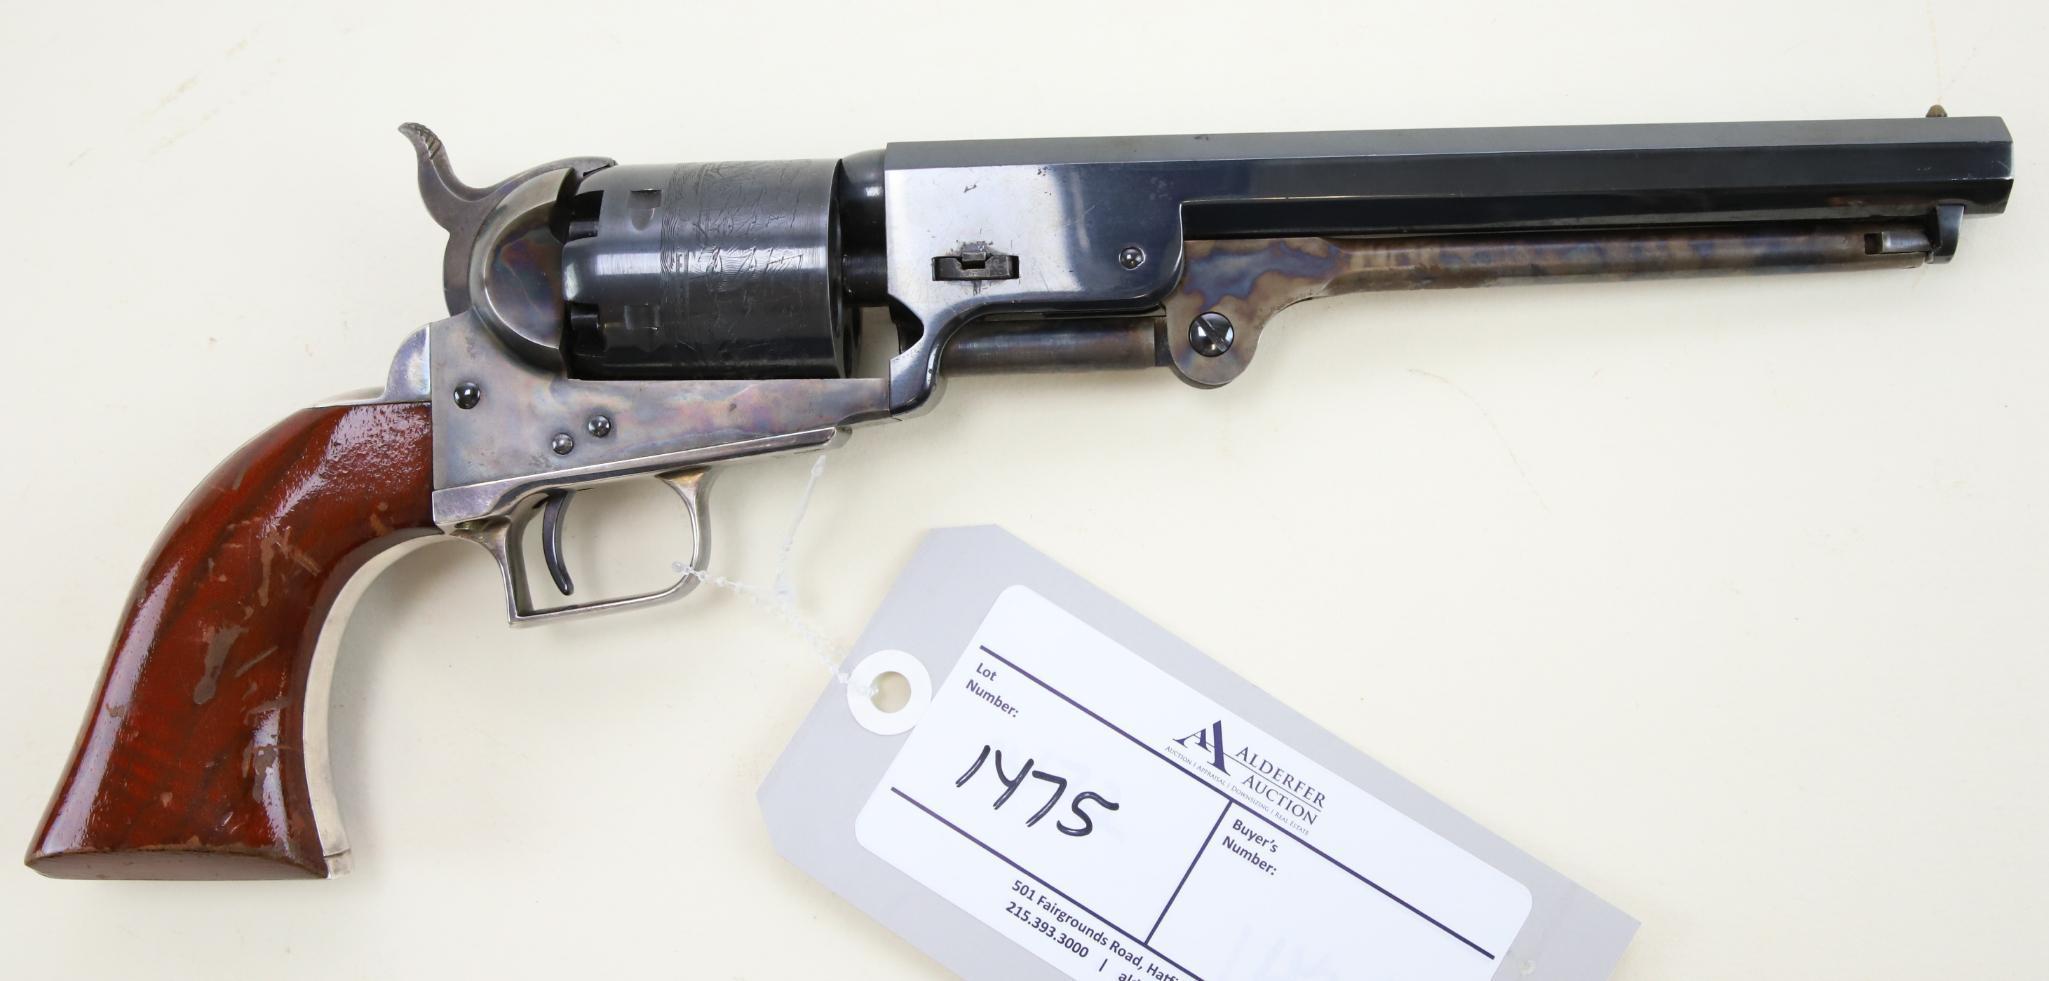 Colt 1851 Generation 2 Commemorative single action revolver.